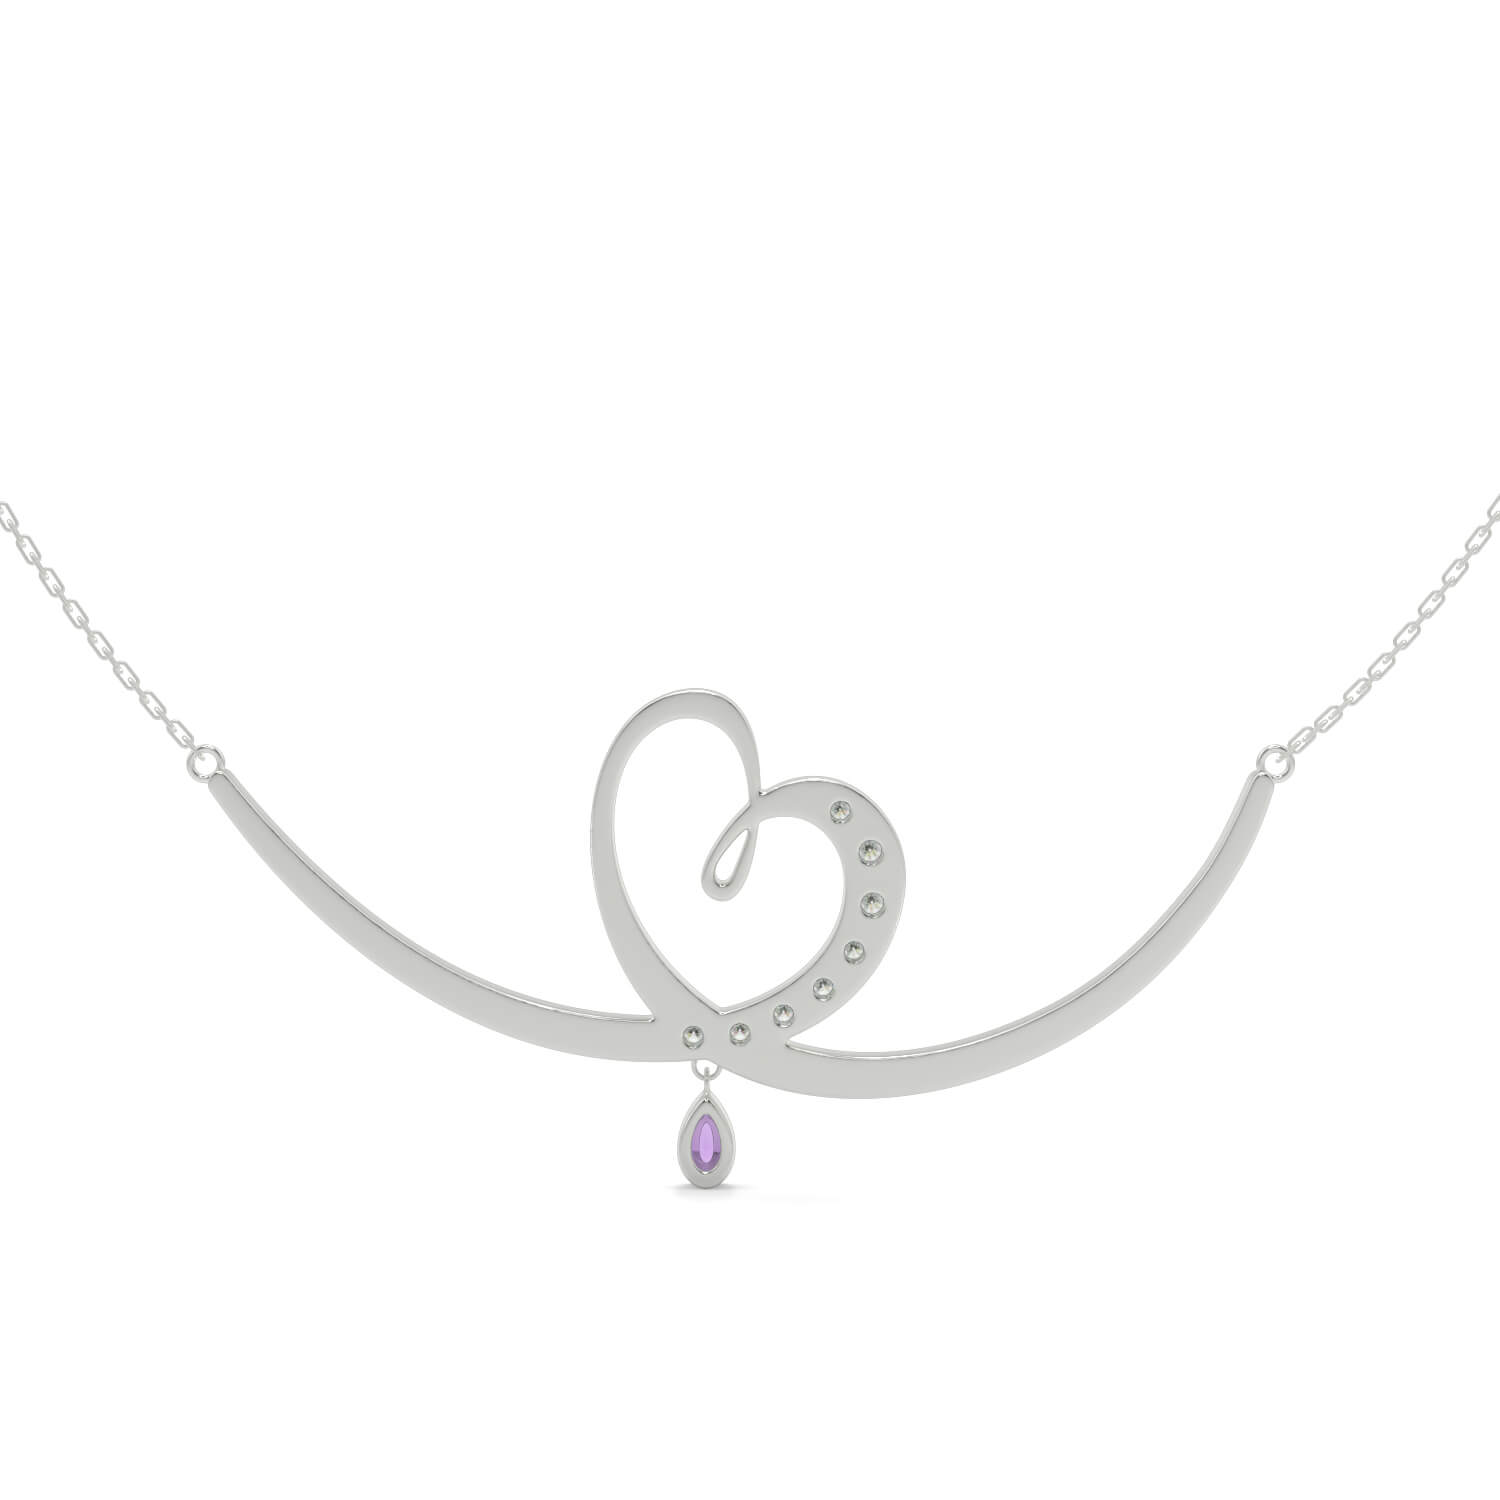 Glider Heart Diamond Necklace 